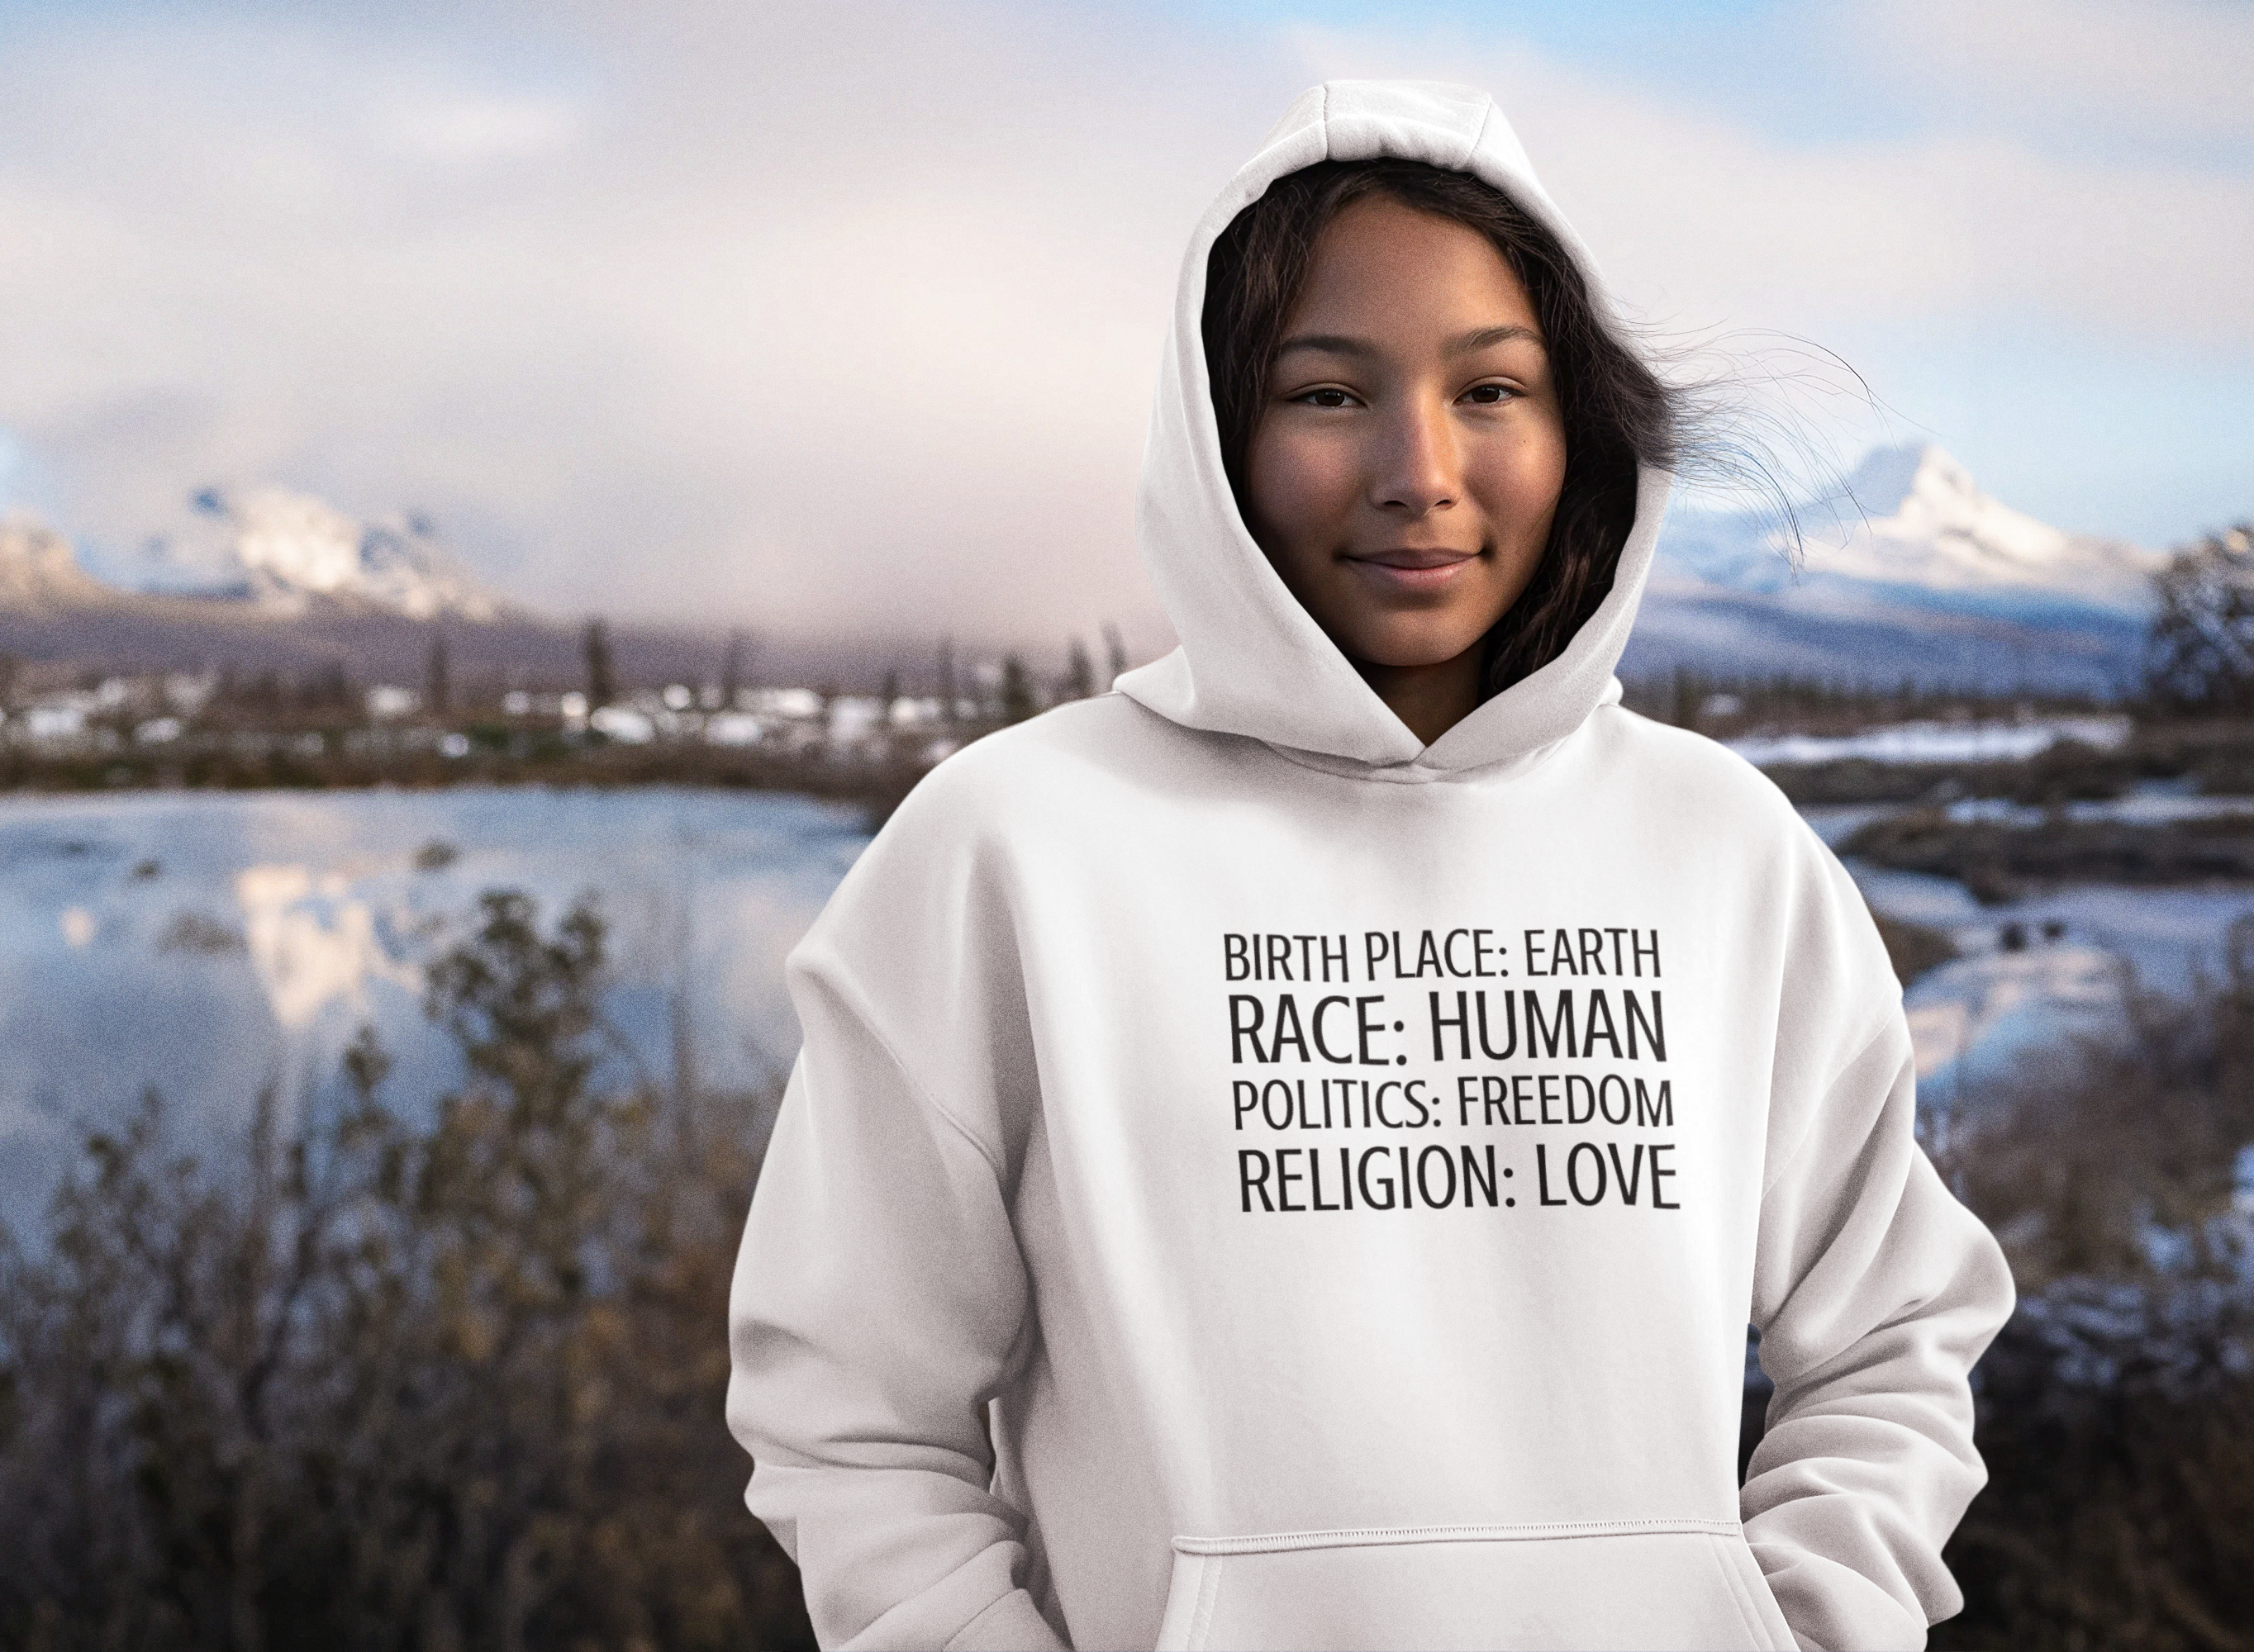 Race:Human